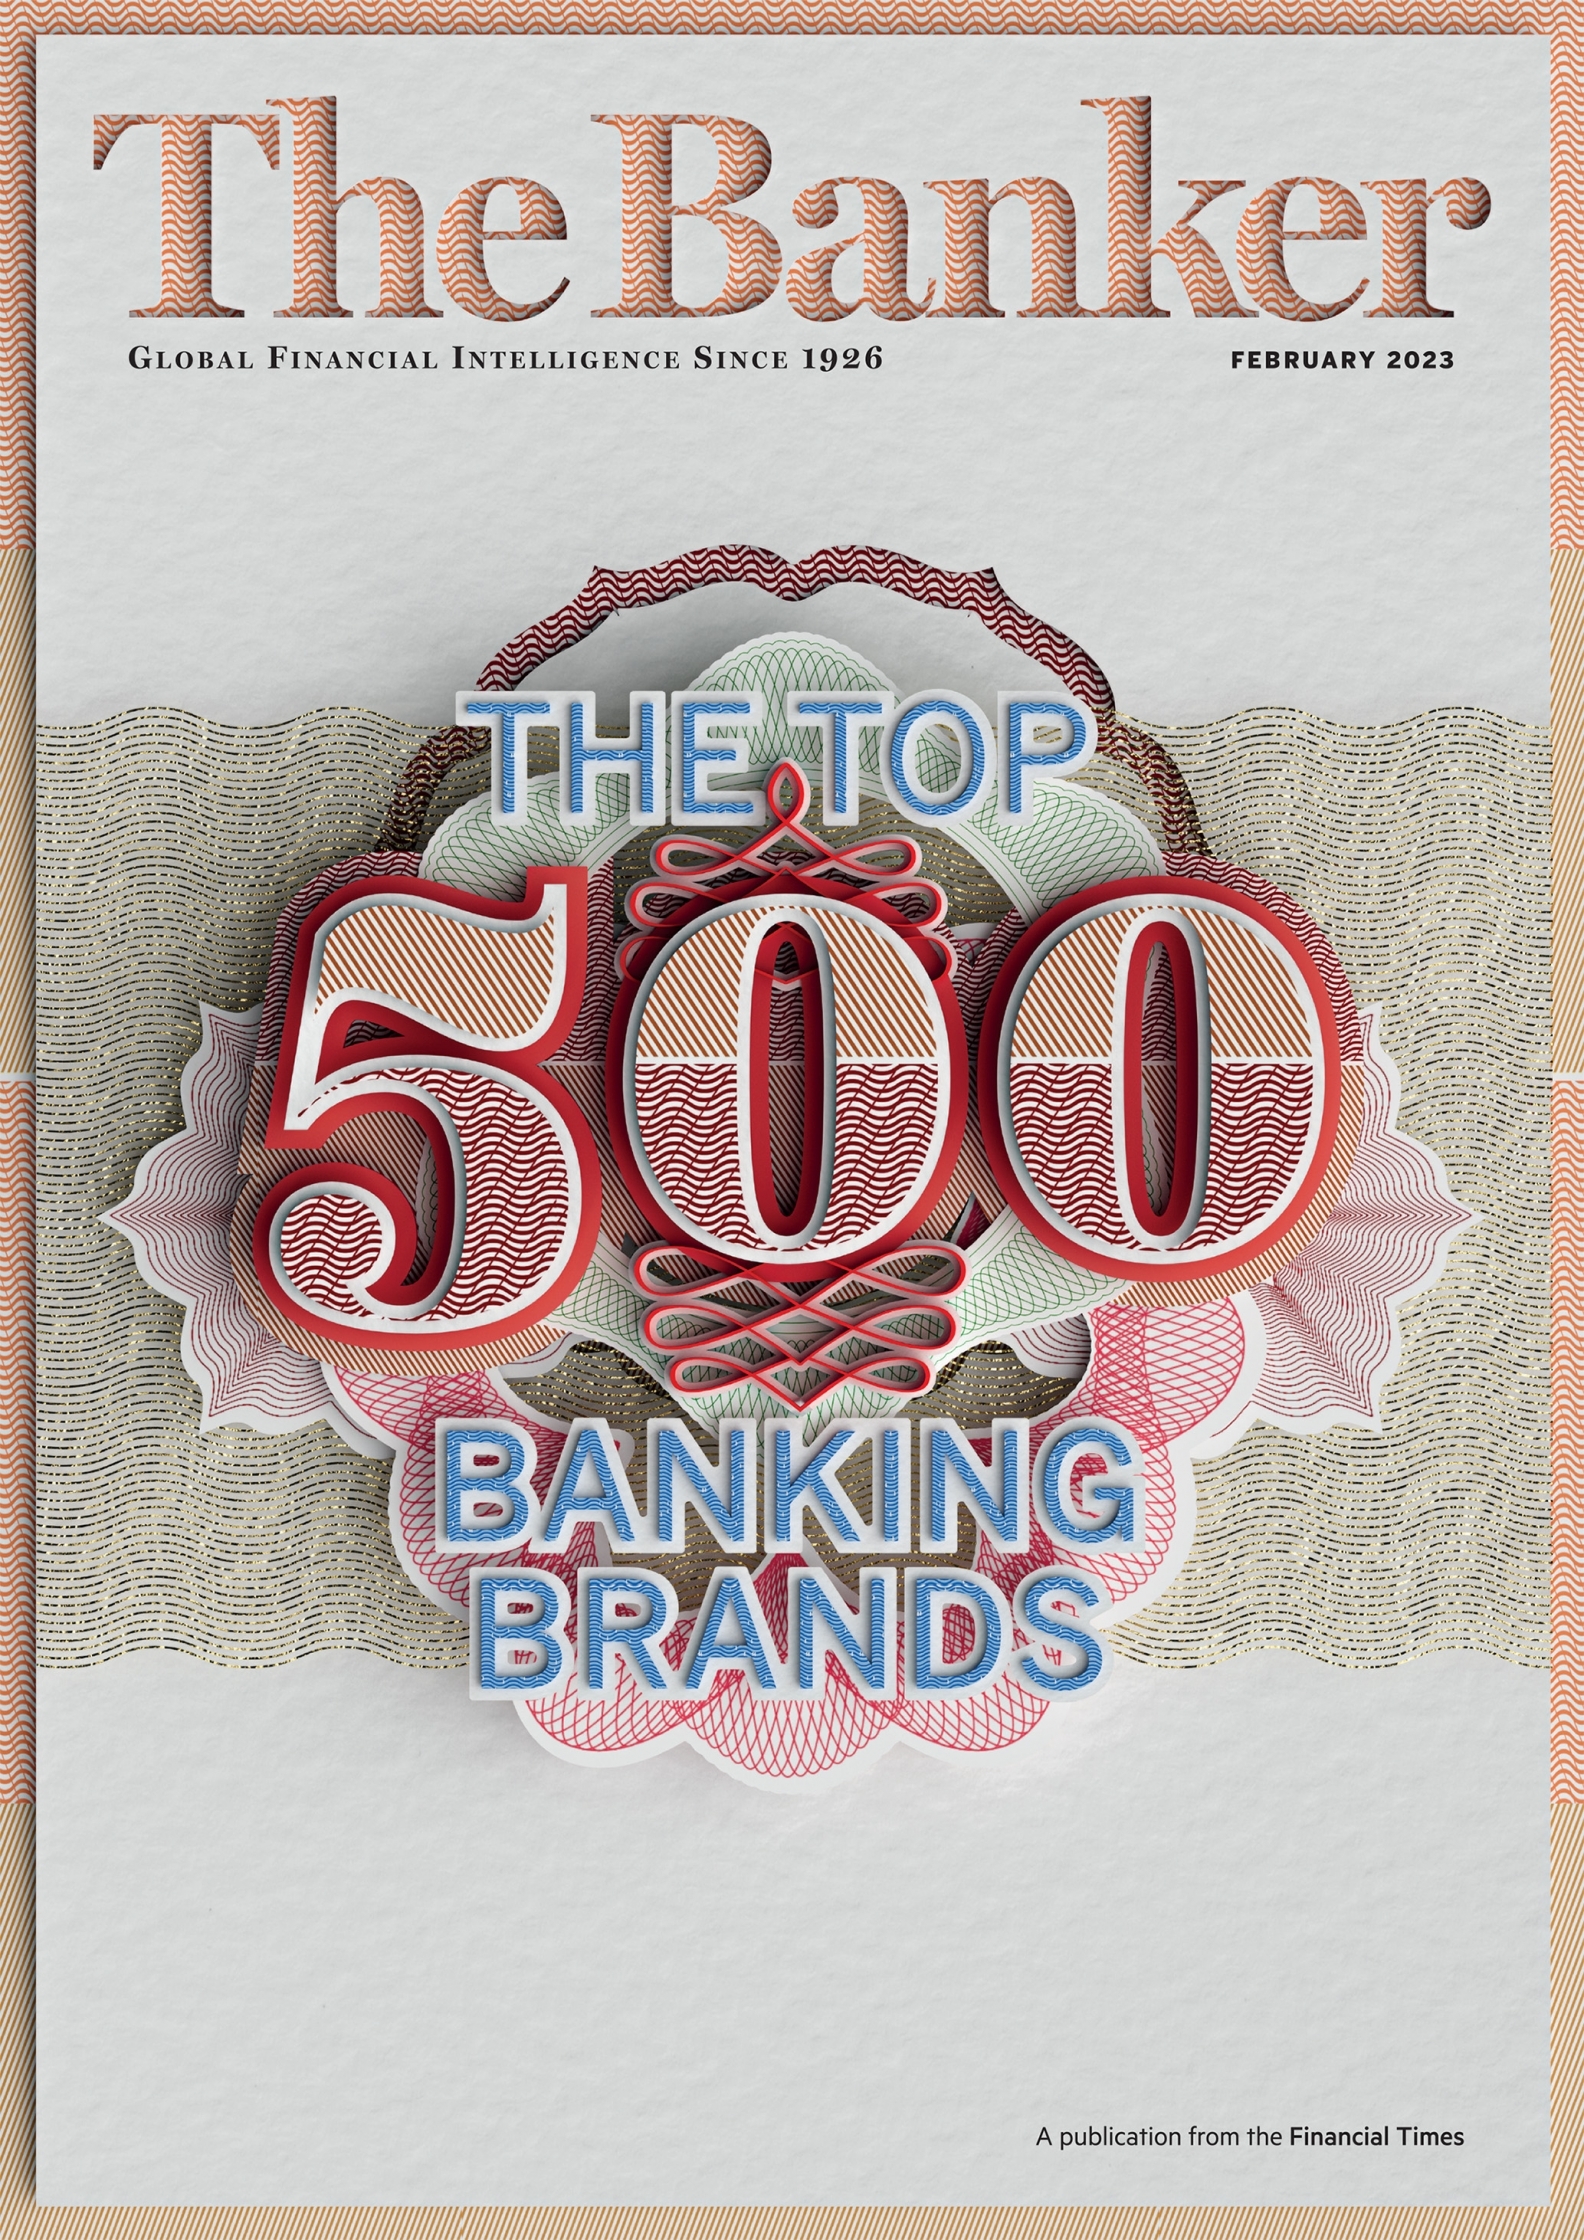 World's Best Banks 2022 - Global Finance Magazine